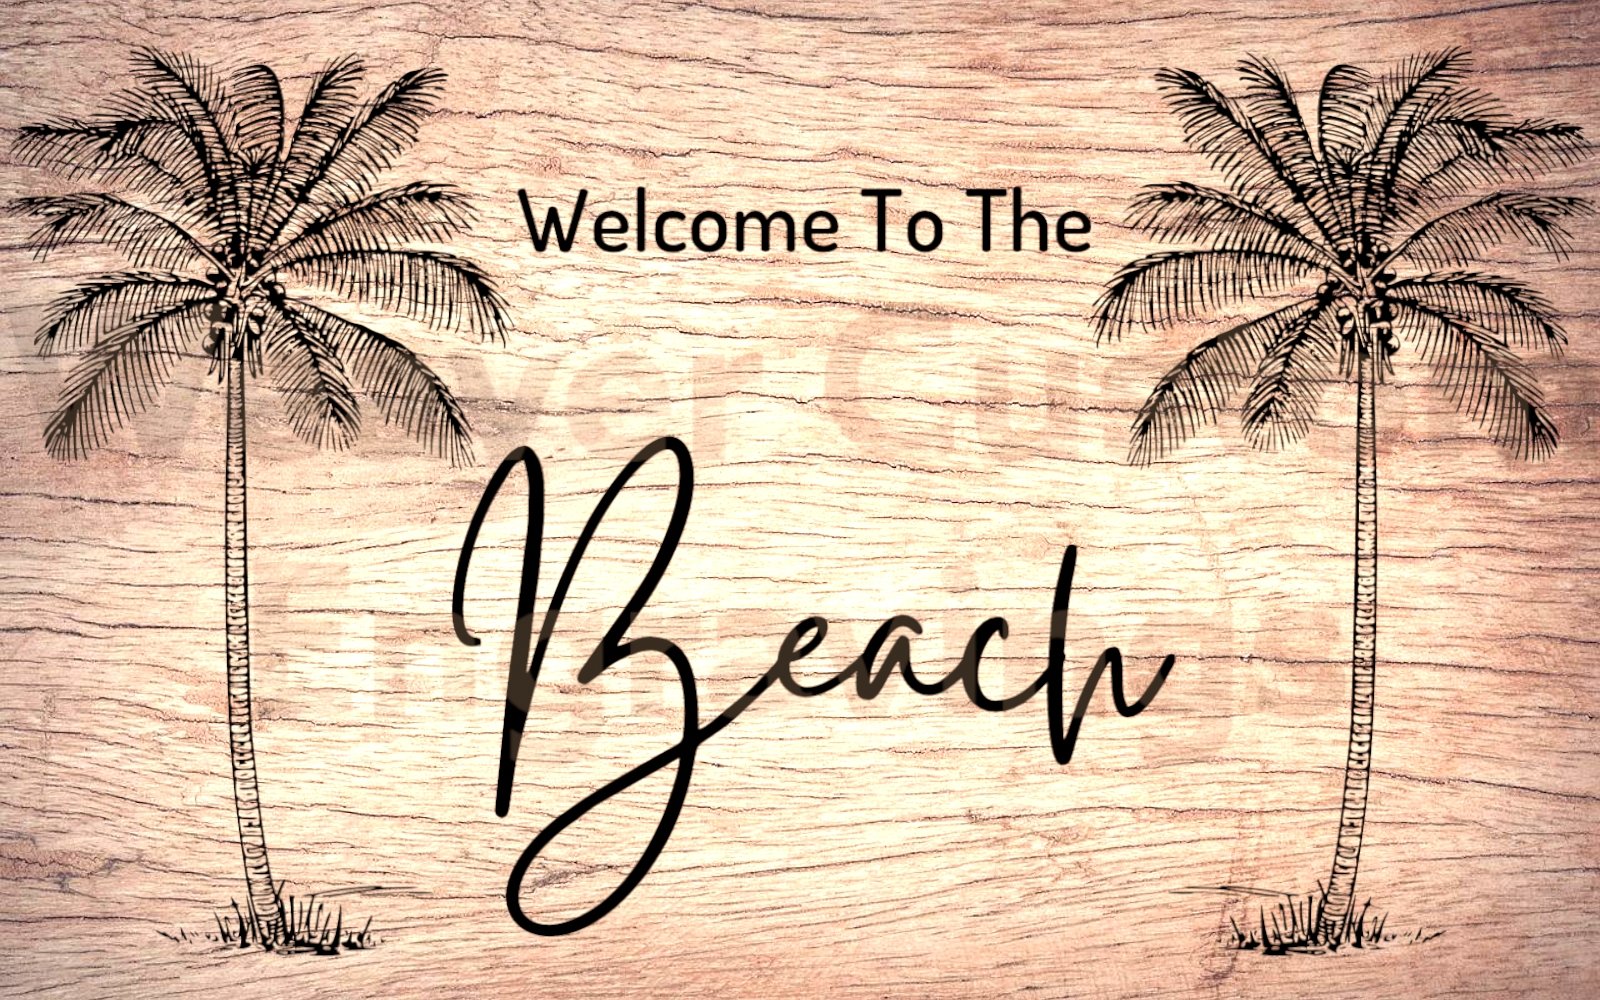 Welcome To The Beach (Digital Download) Digital Artwork Weaver Custom Engravings Digital Downloads   